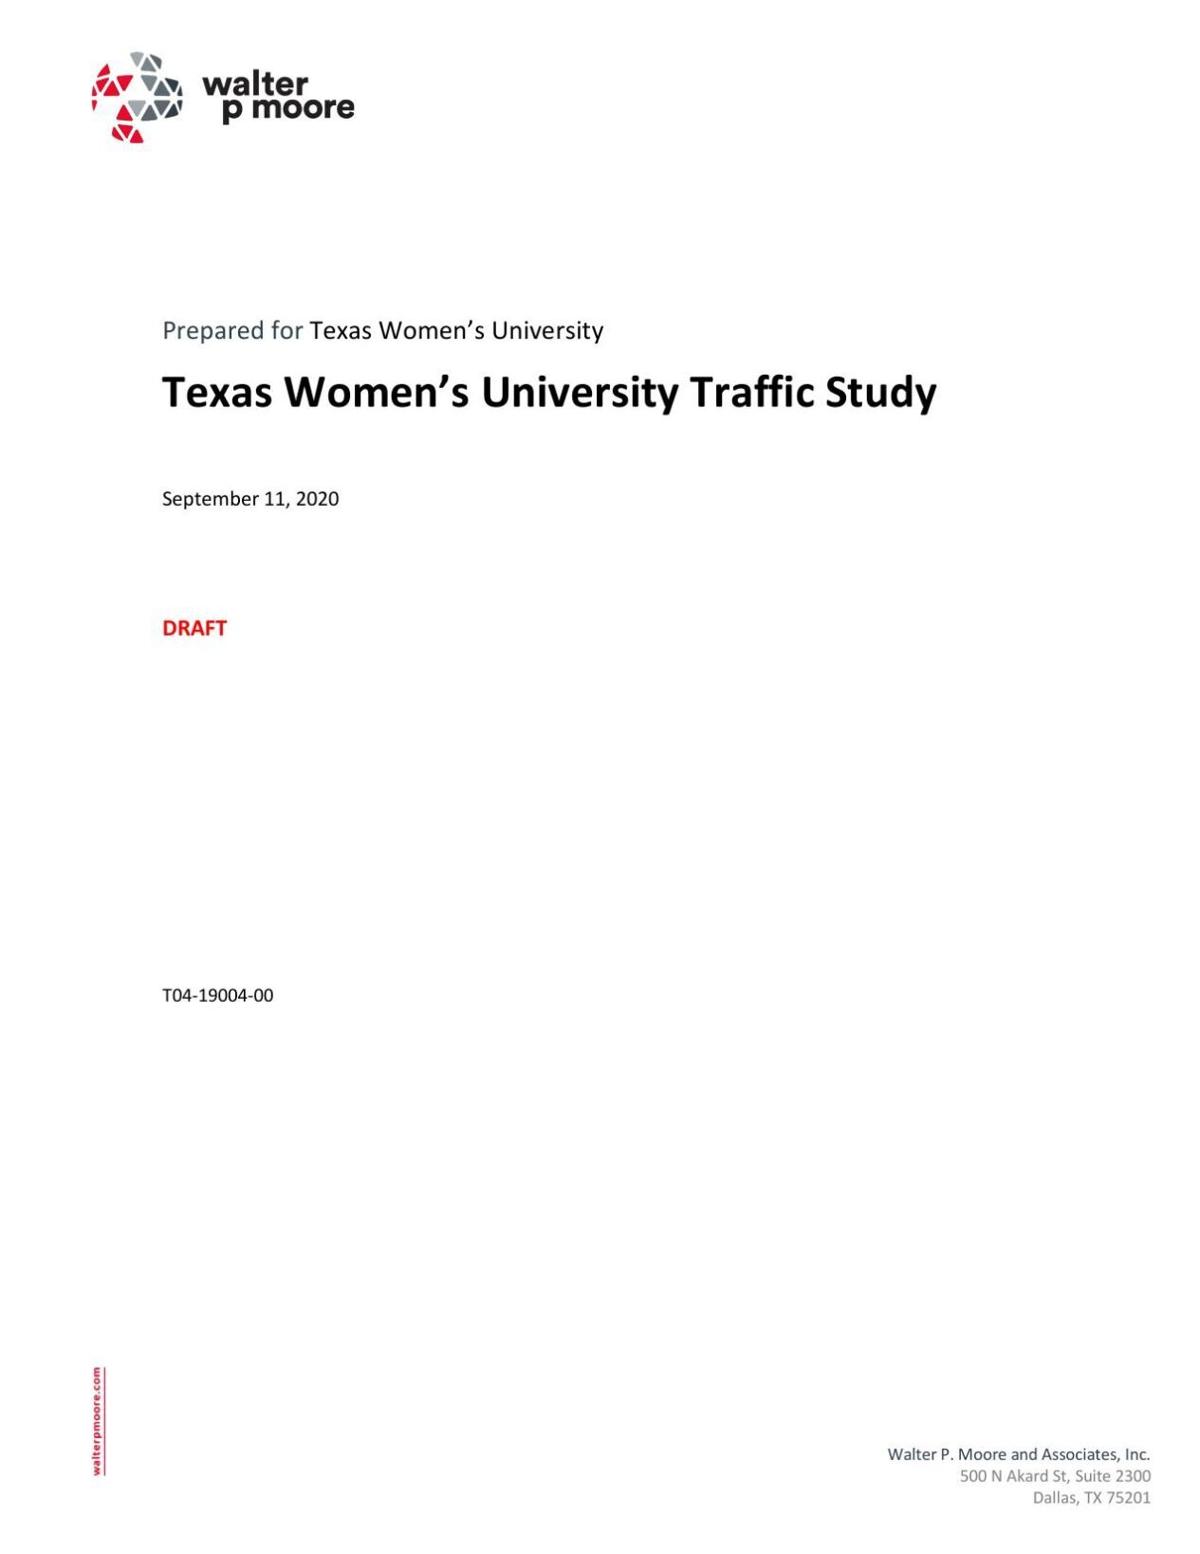 TWU Traffic Study